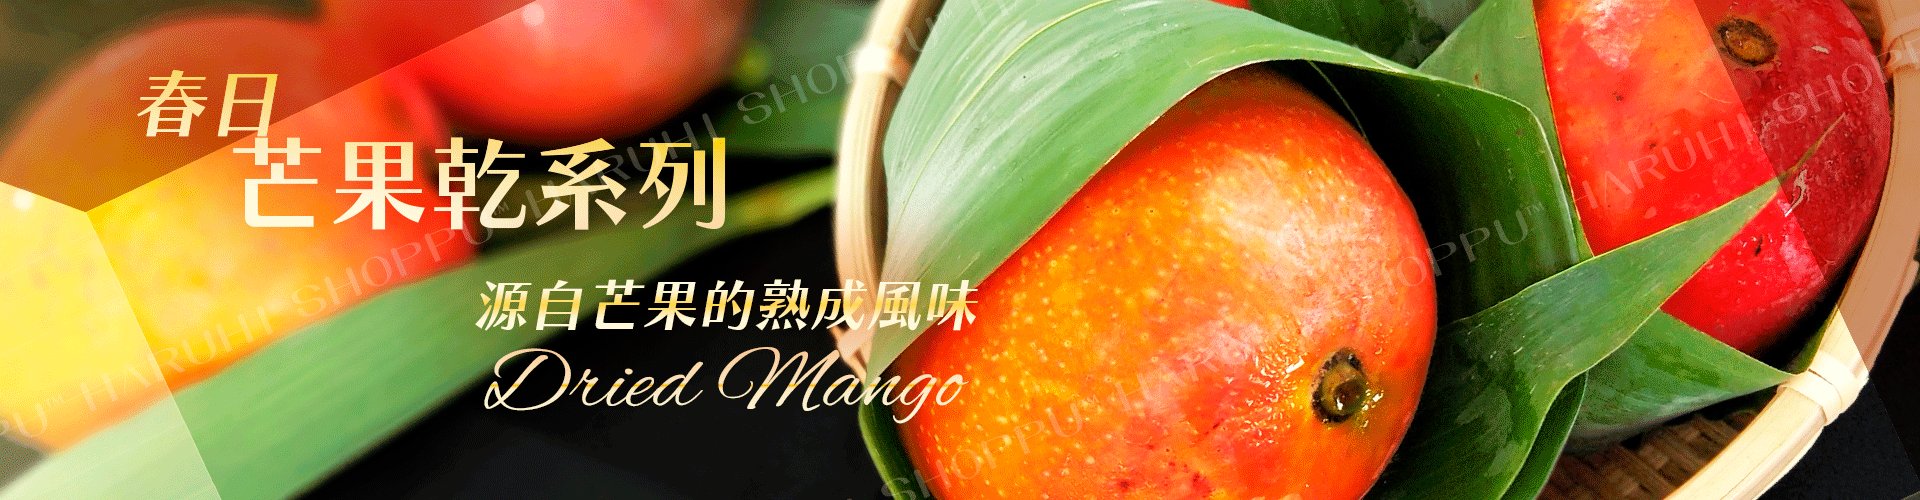 mango_banner